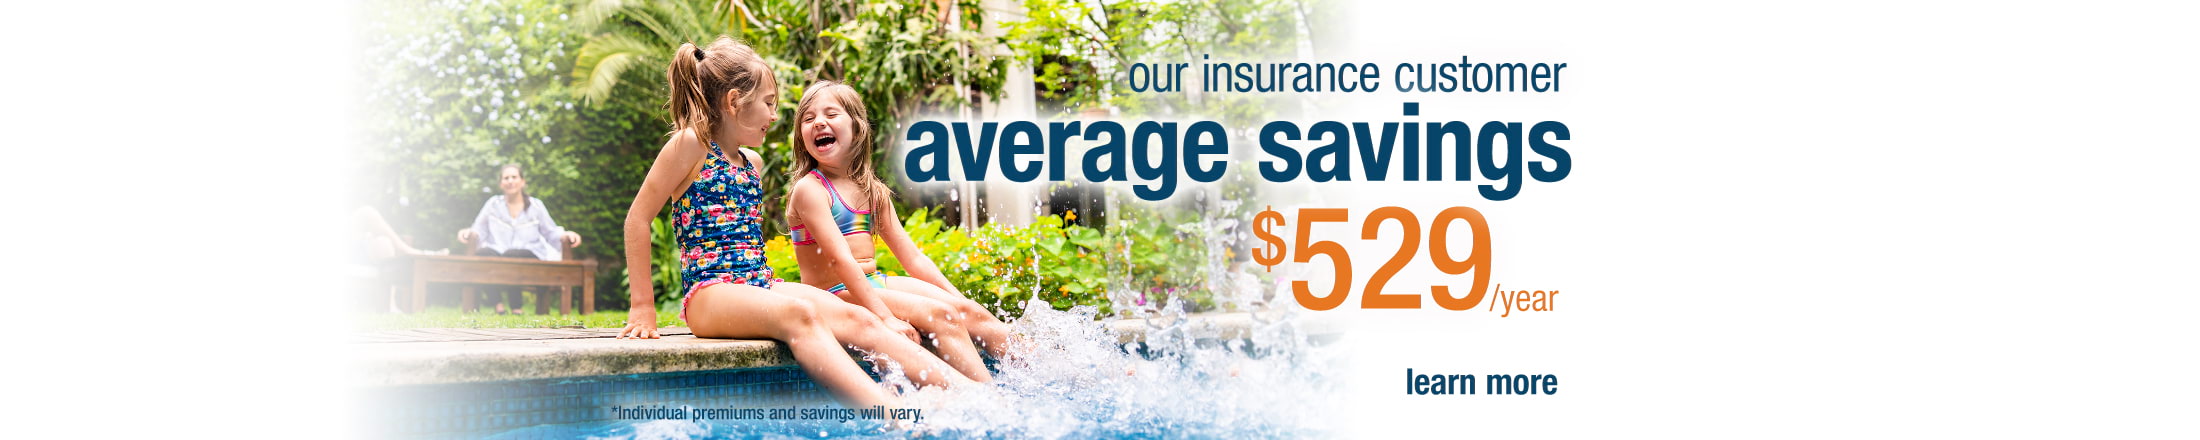 Average insurance savings $529